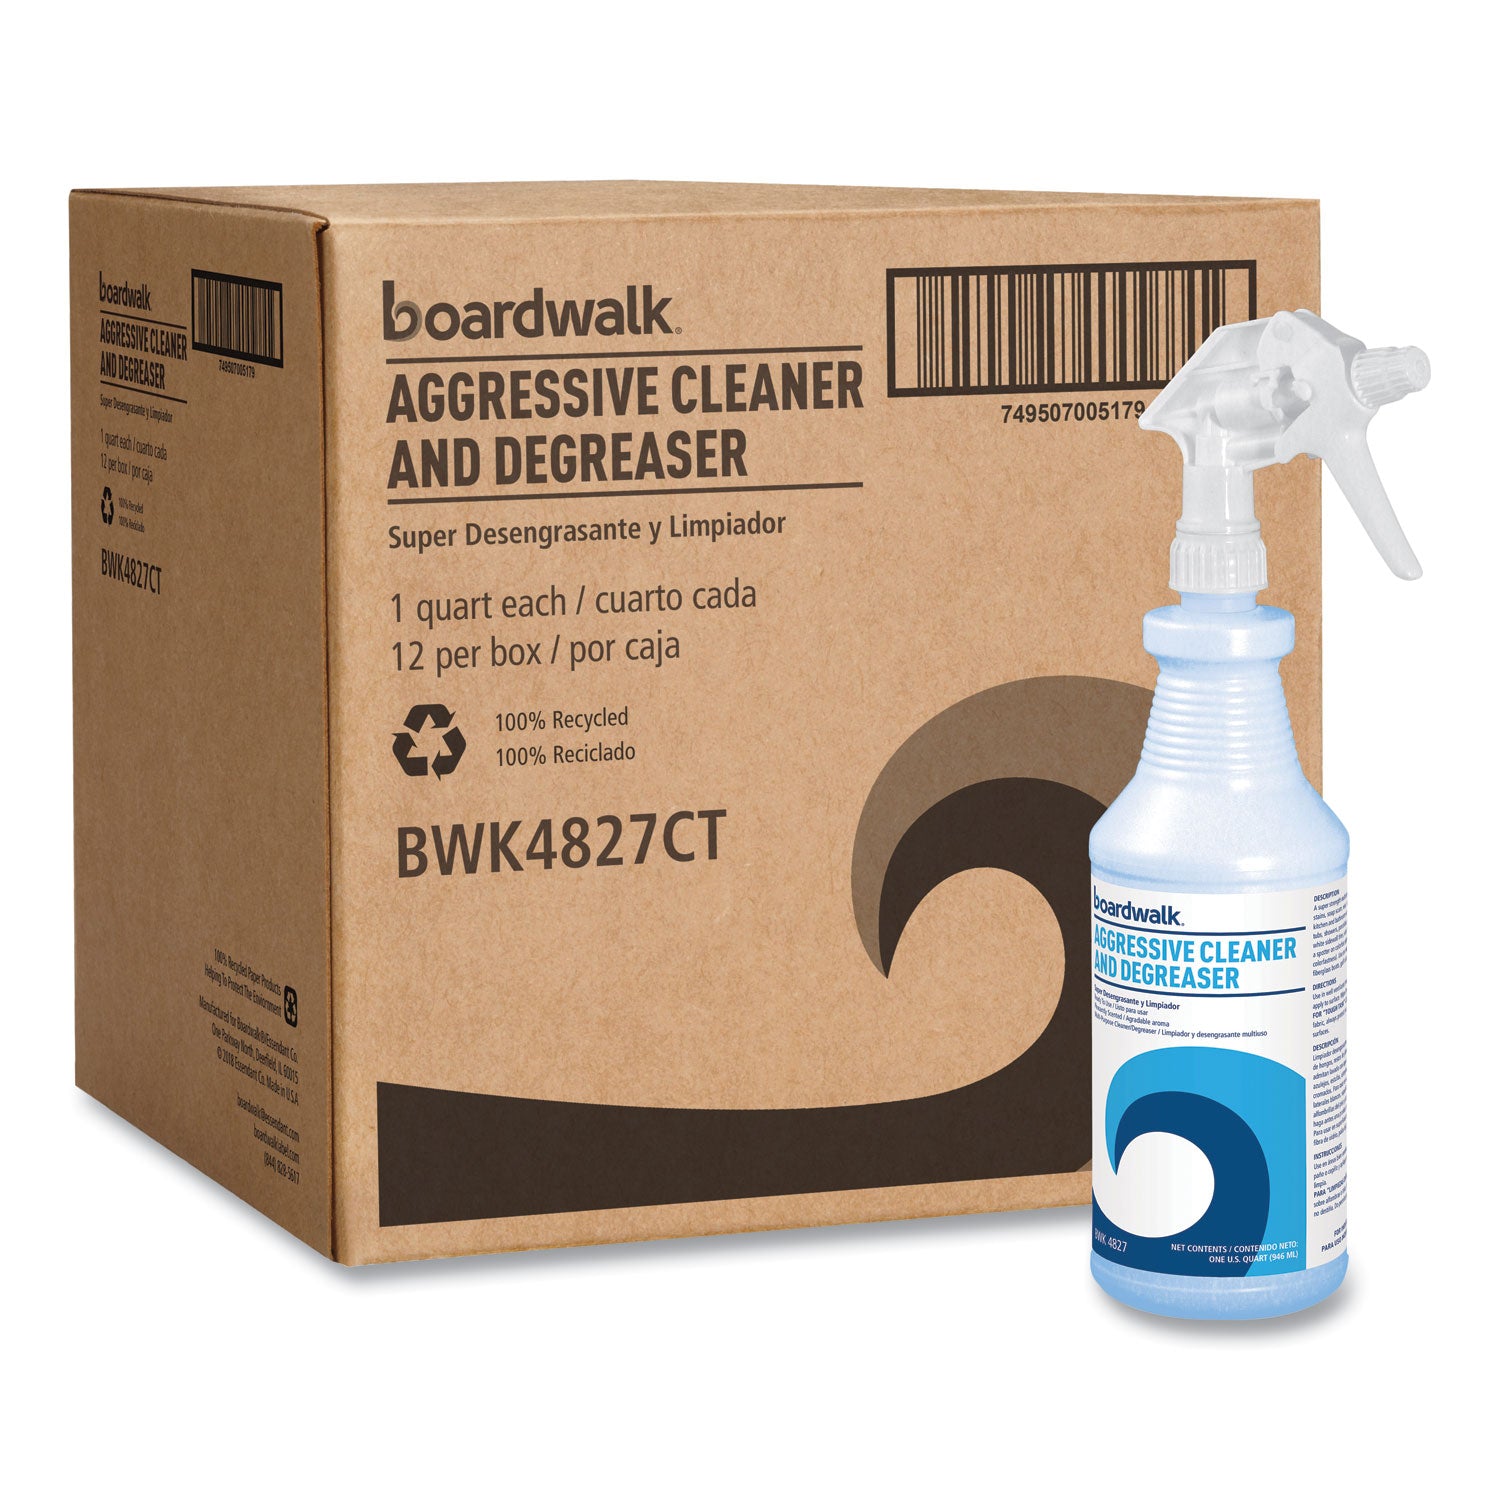 aggressive-cleaner-and-degreaser-lemon-scent-32-oz-bottle-12-carton_bwk4827 - 1